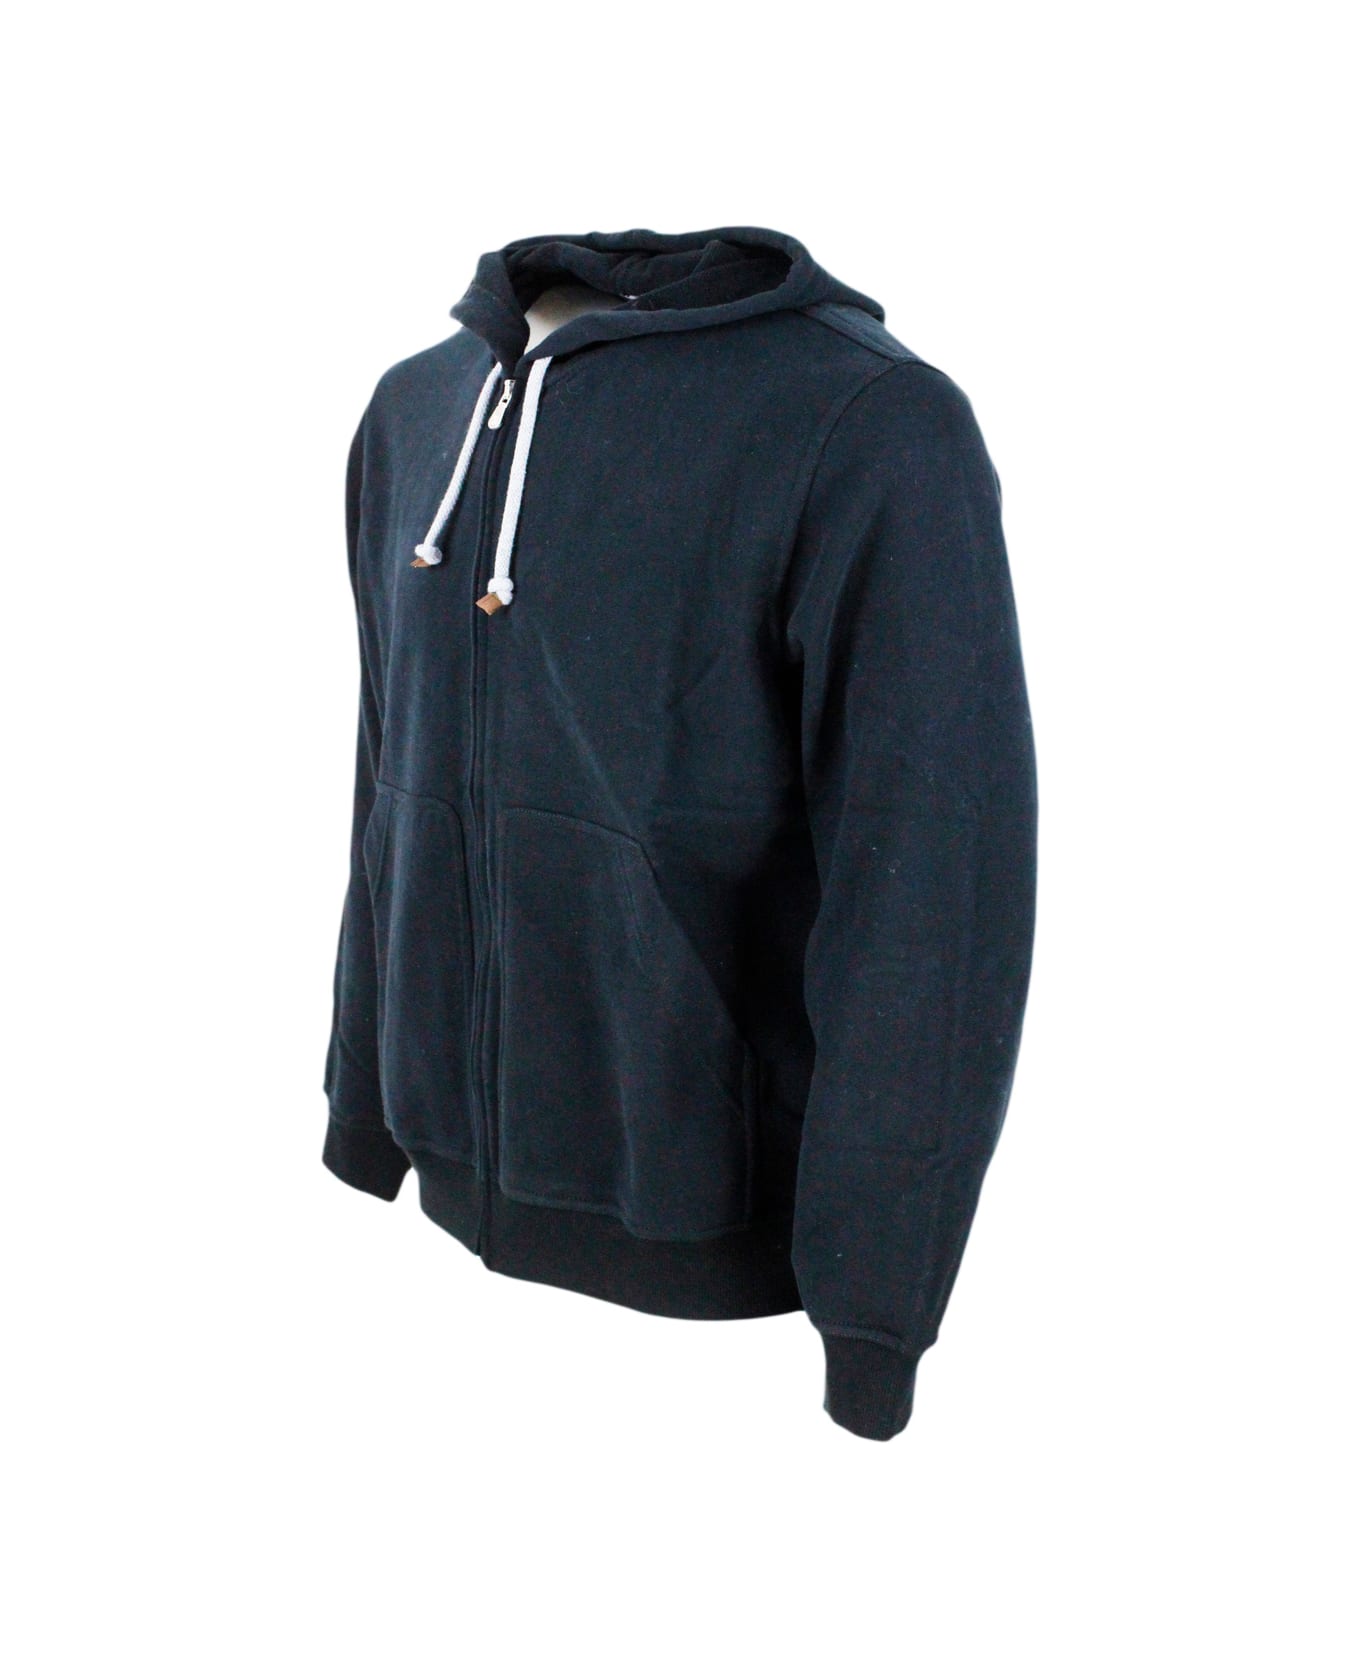 Brunello Cucinelli Hooded Sweatshirt With Drawstring And Zip Closure - Black ニットウェア